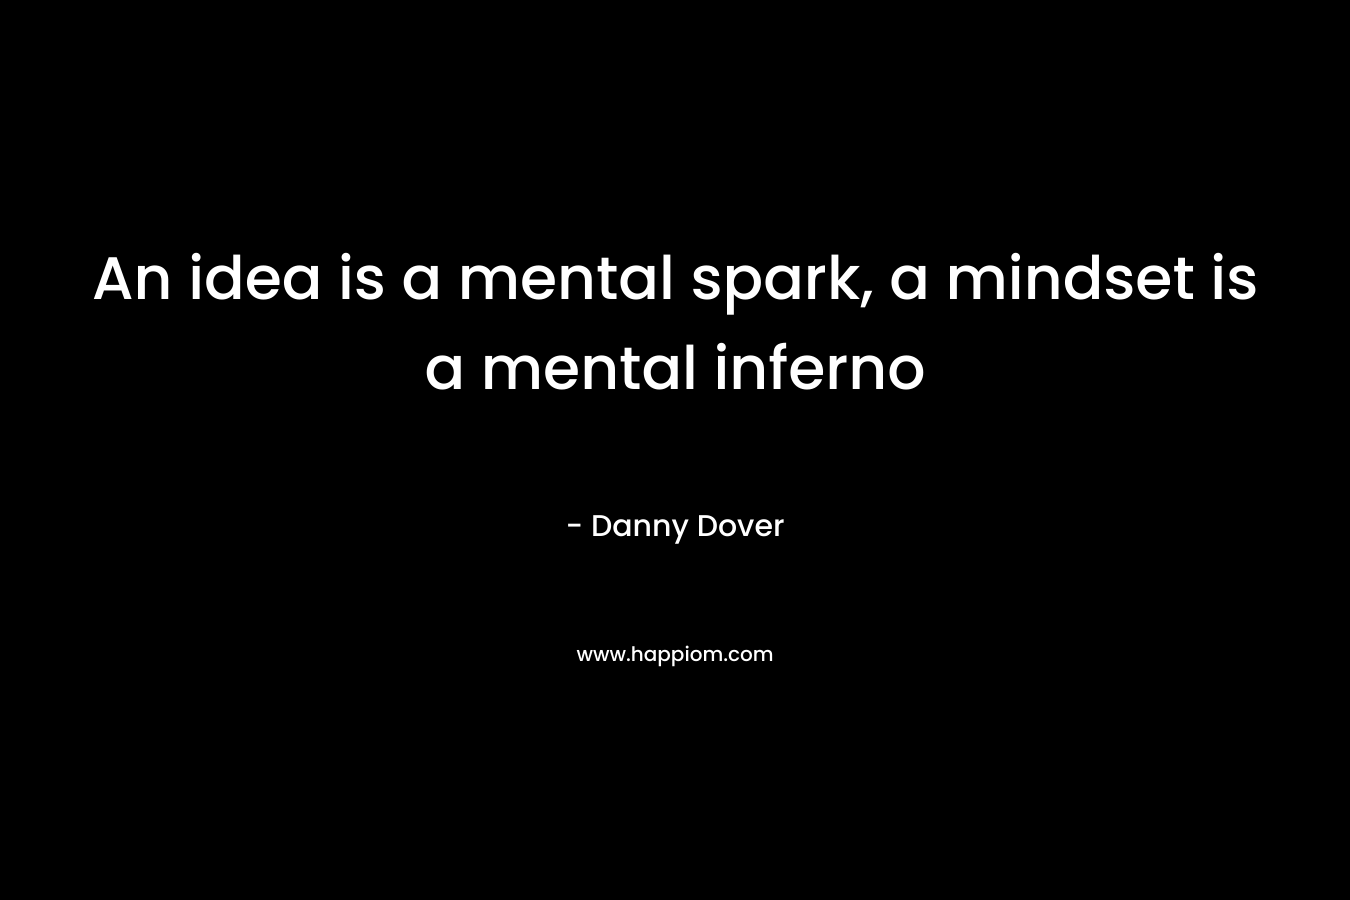 An idea is a mental spark, a mindset is a mental inferno